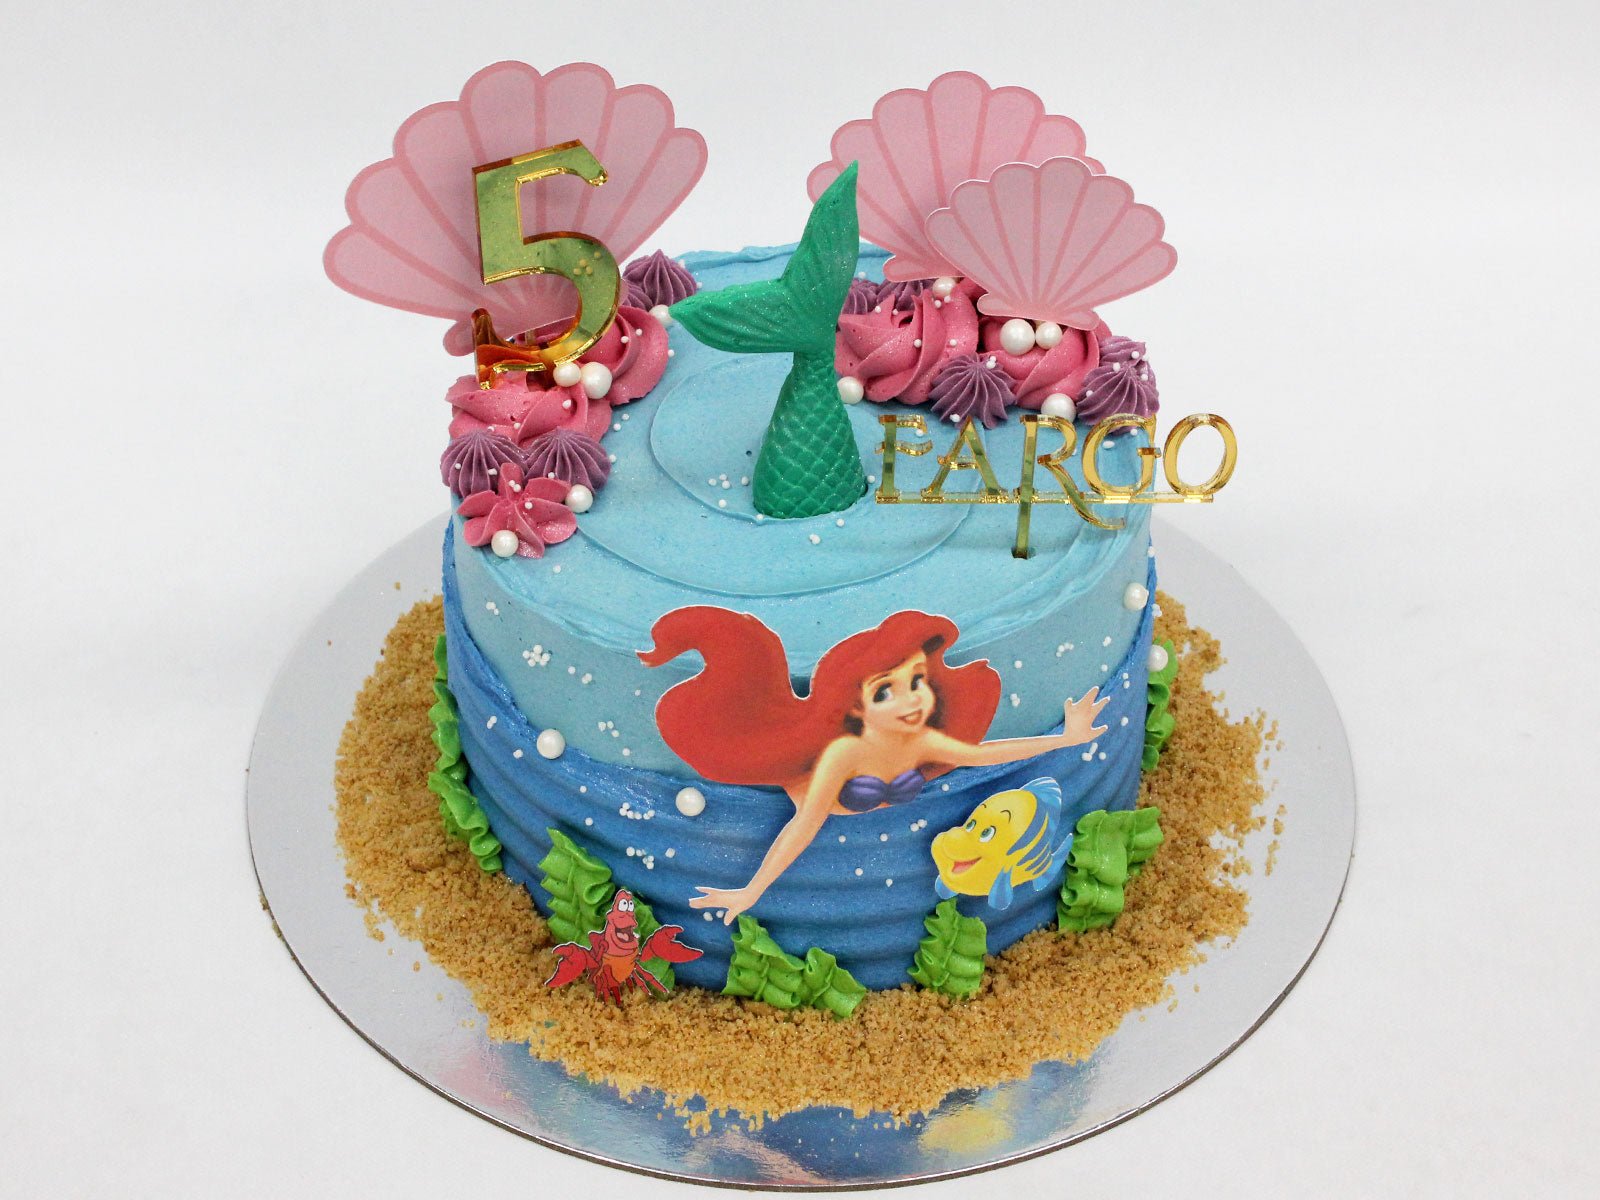 Little Mermaid Cake – Rosanna Pansino